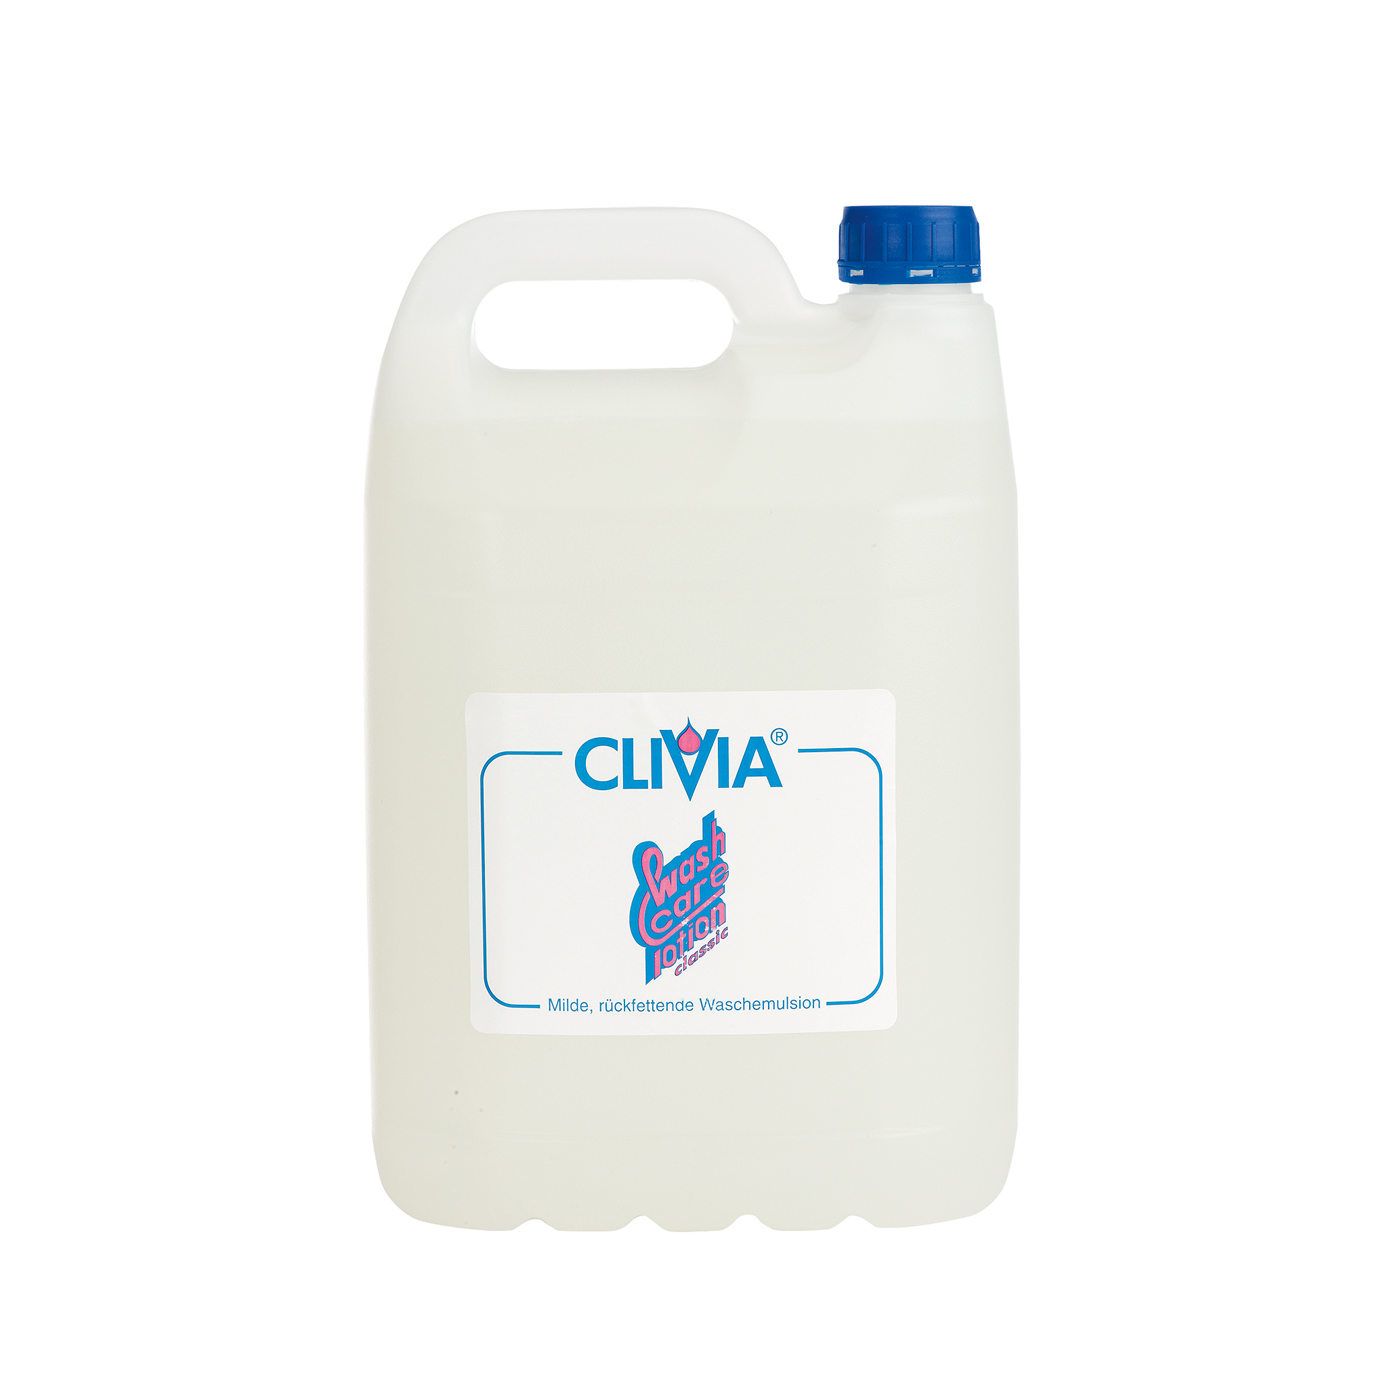 Clivia classic Washing Emulsion - 5000 ml